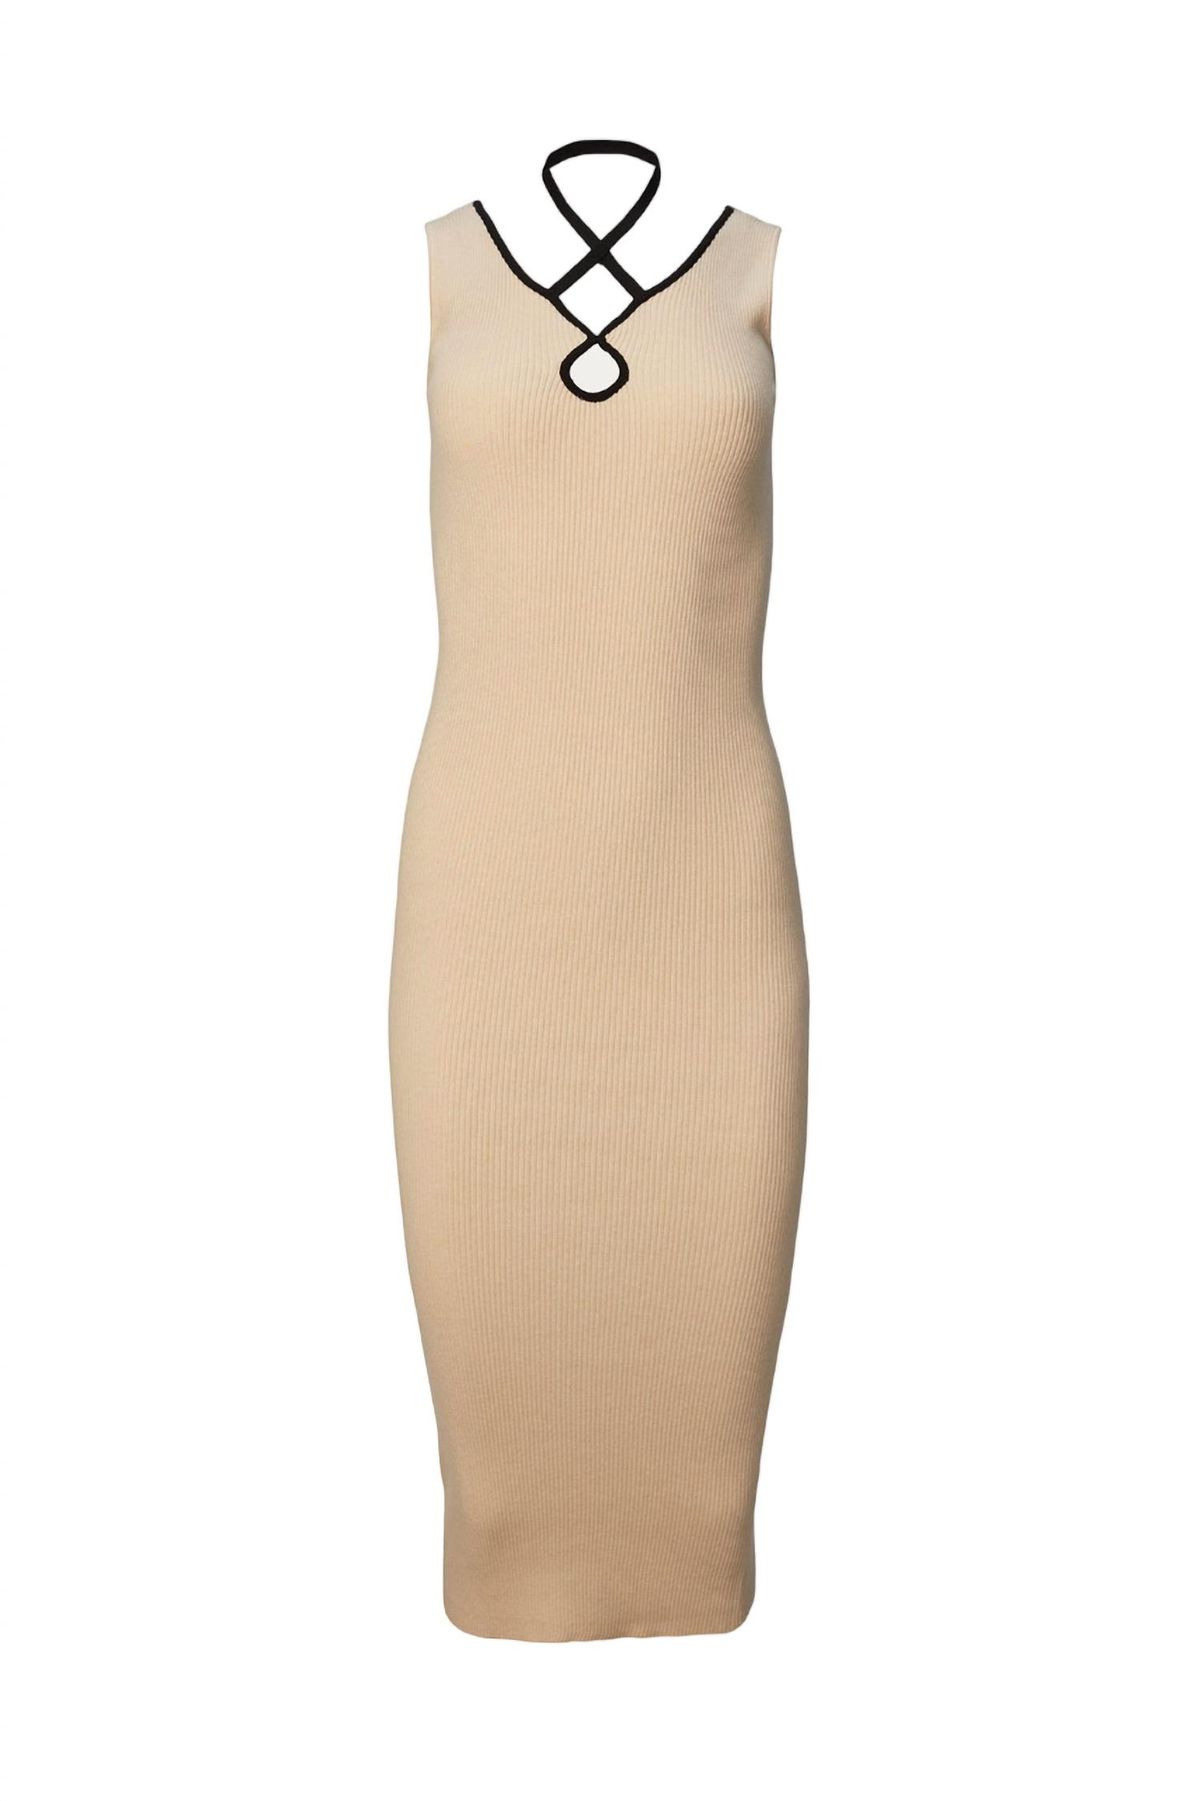 Style 1-1010215816-2901 WYNN HAMLYN Size M Nude Cocktail Dress on Queenly